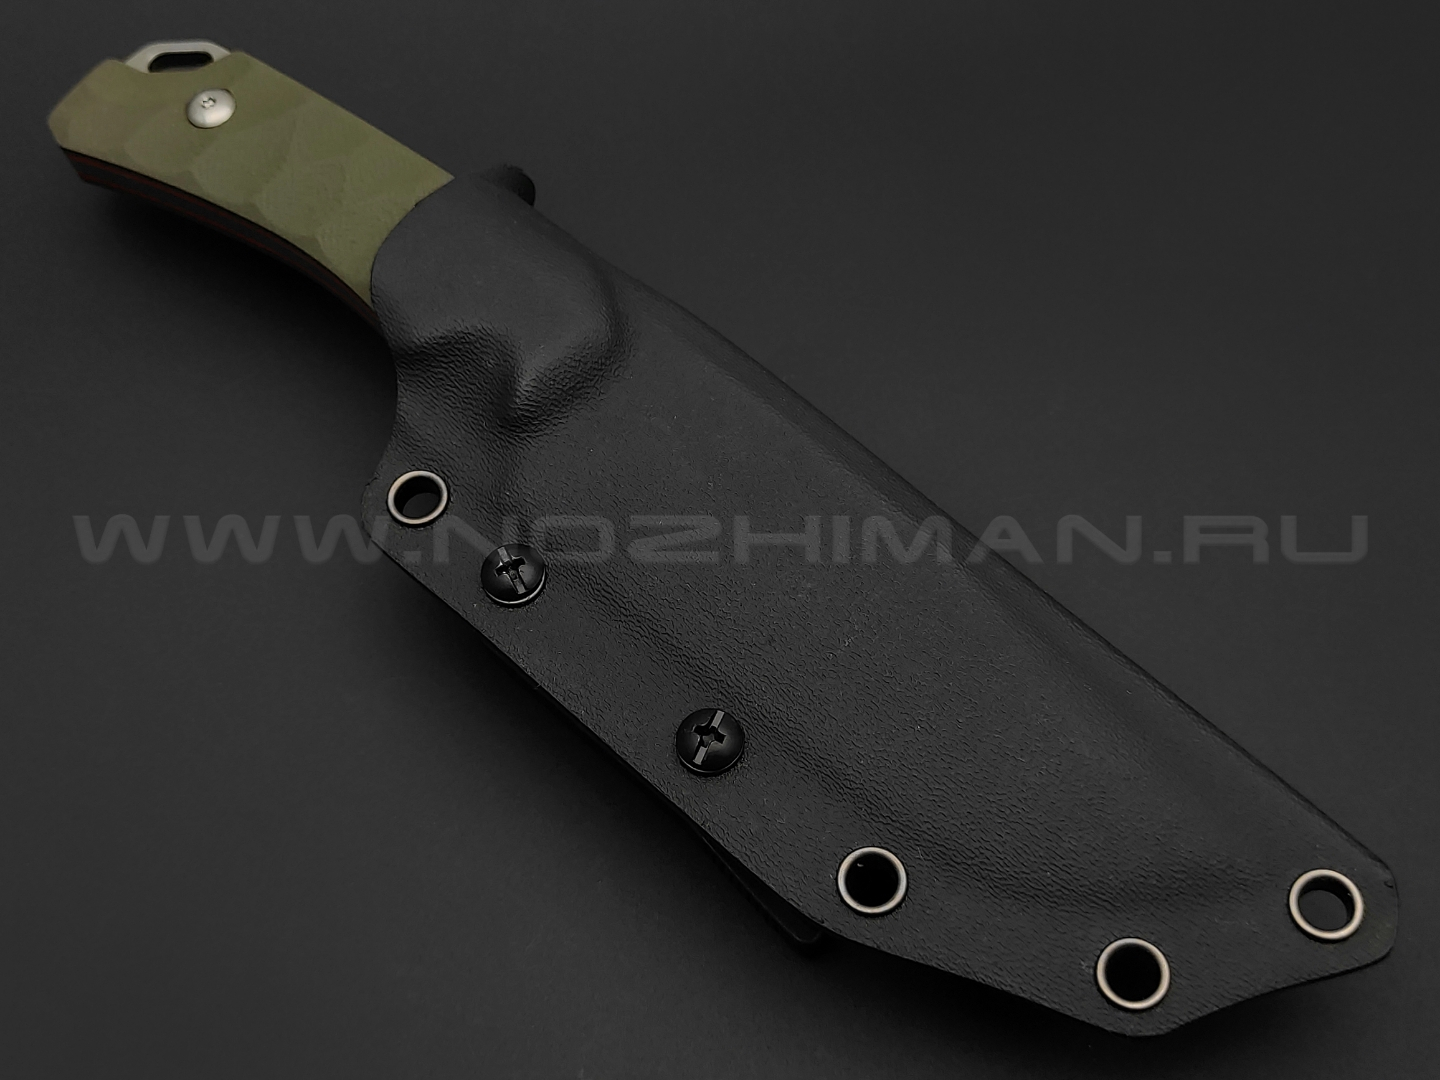 Нож Black Fox Lynx BF-756 OD сталь D2, рукоять G10 OD green